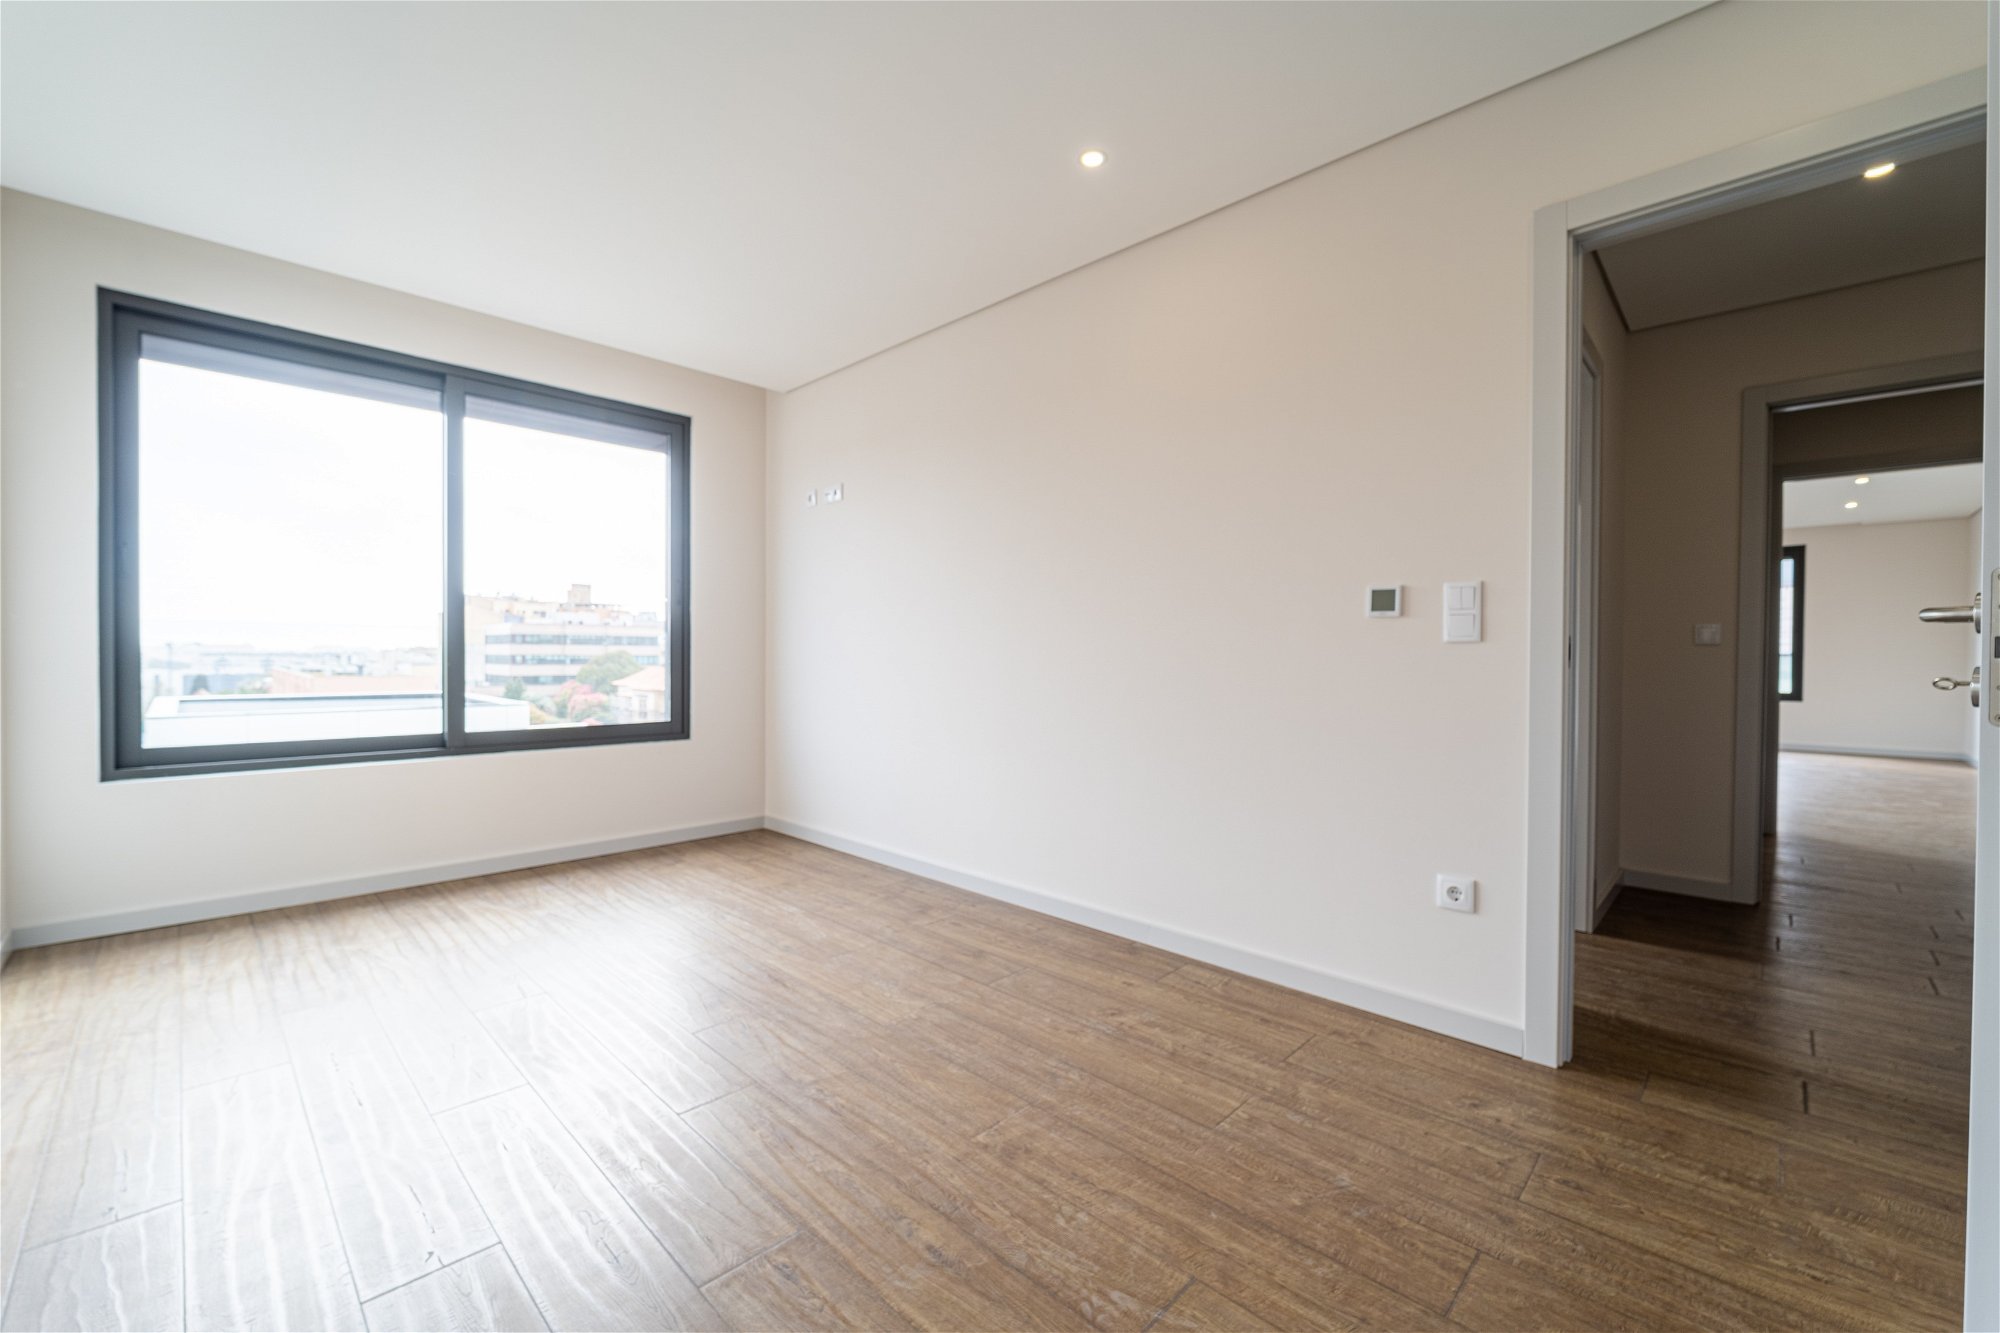 3 bedrooms apartment with balcony in Boavista, Porto 2787119305